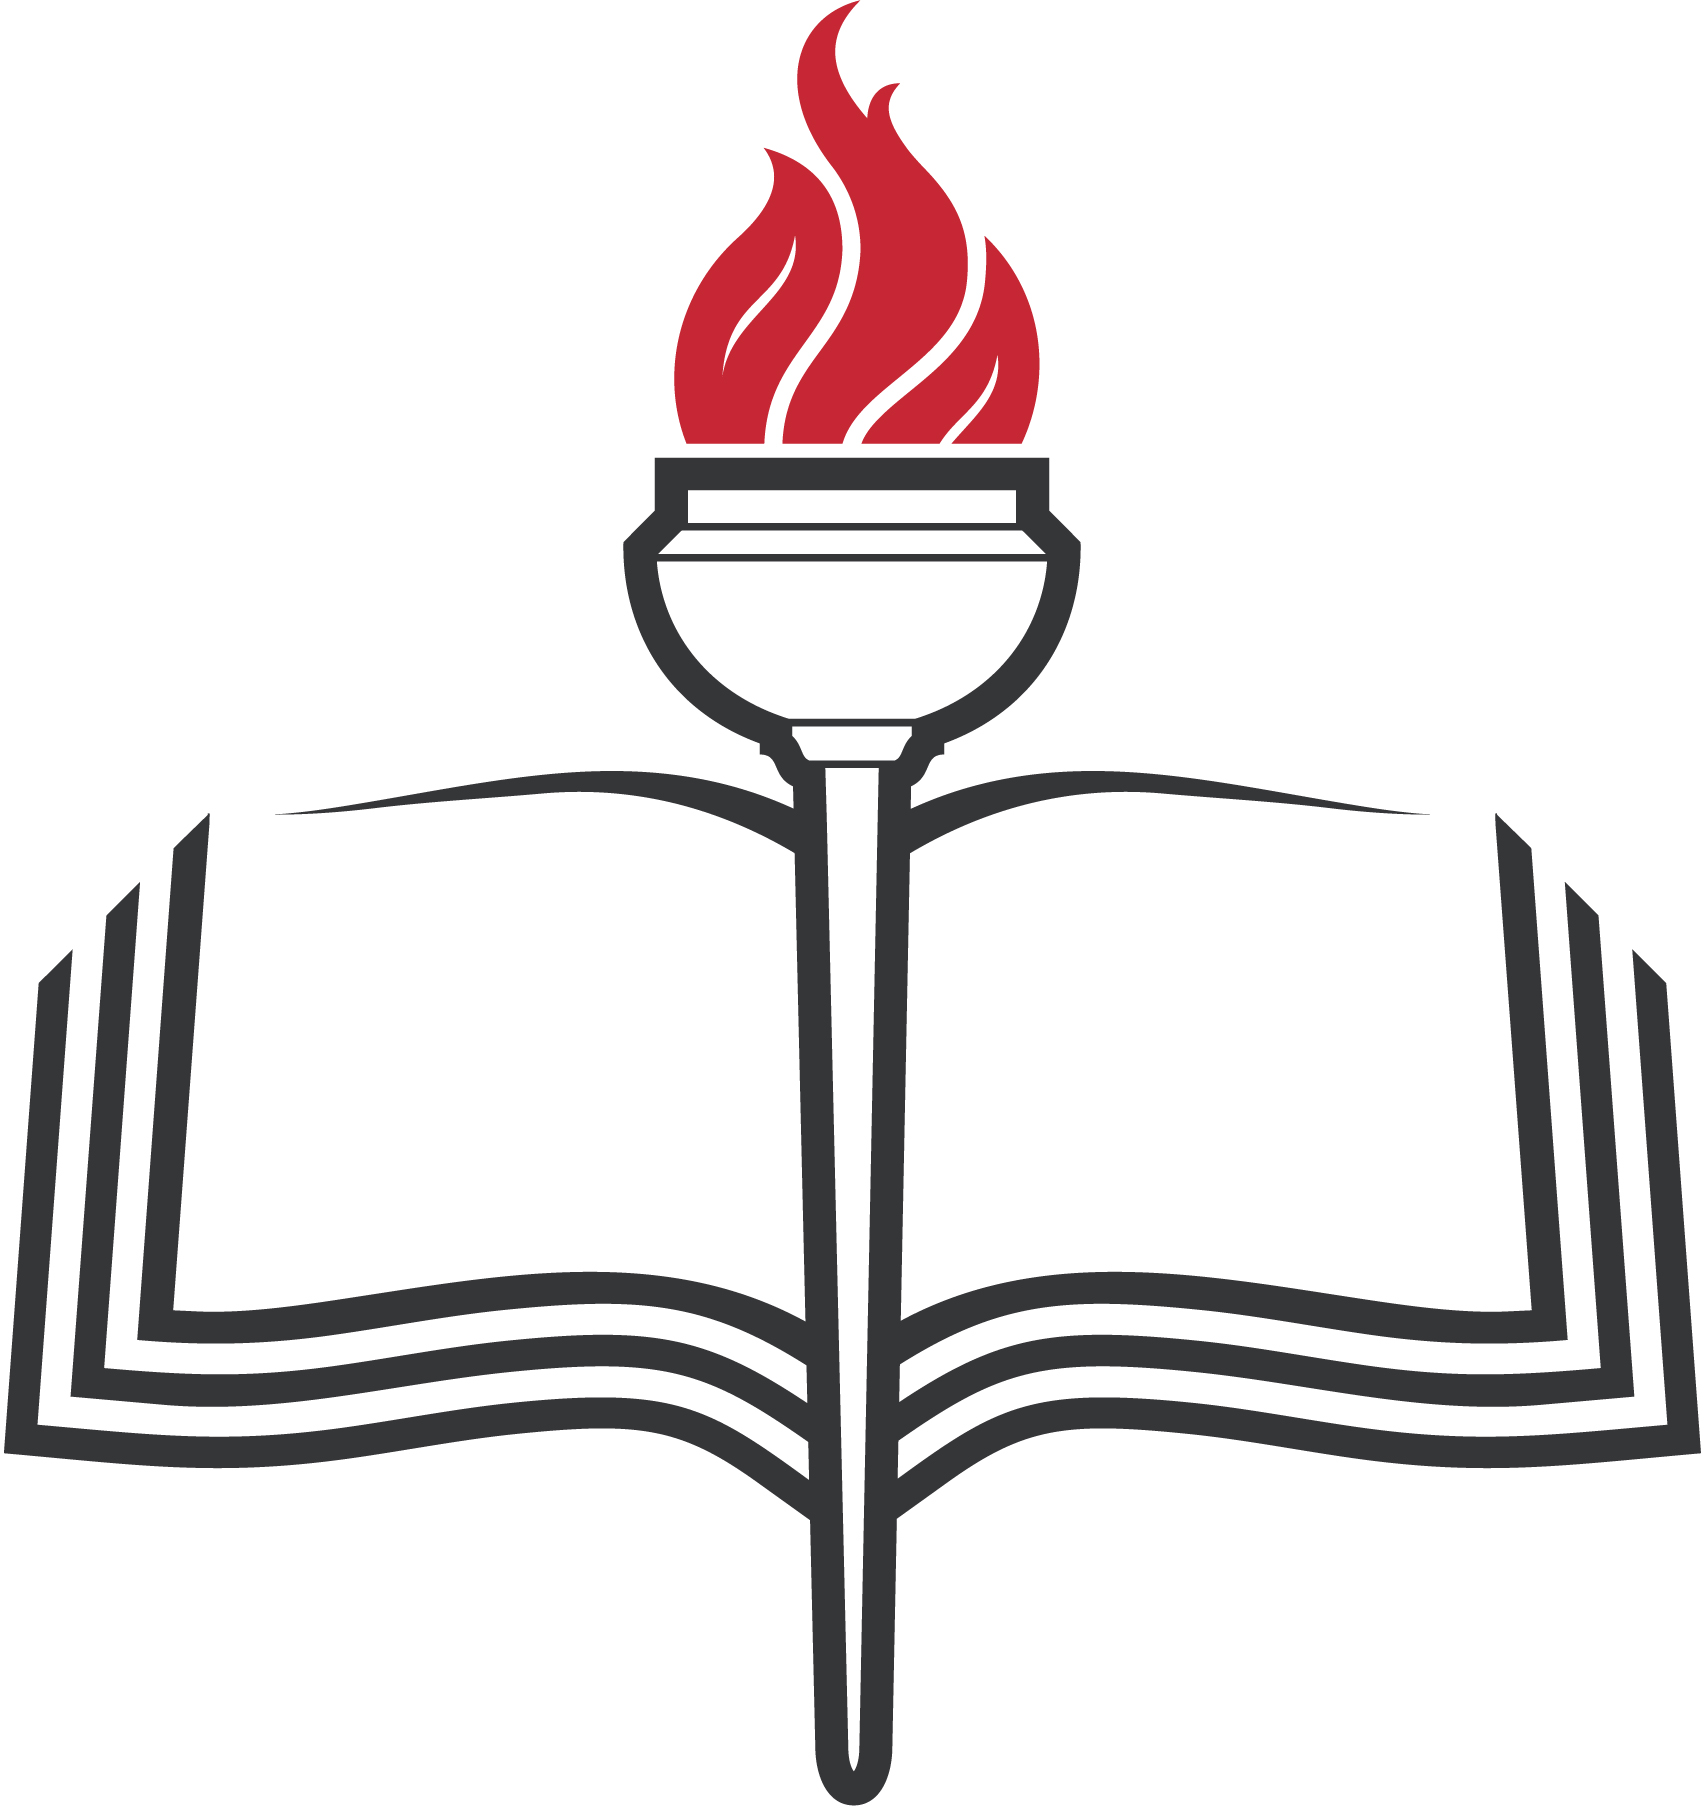 MEB Milli Eğitim Logo photo - 1